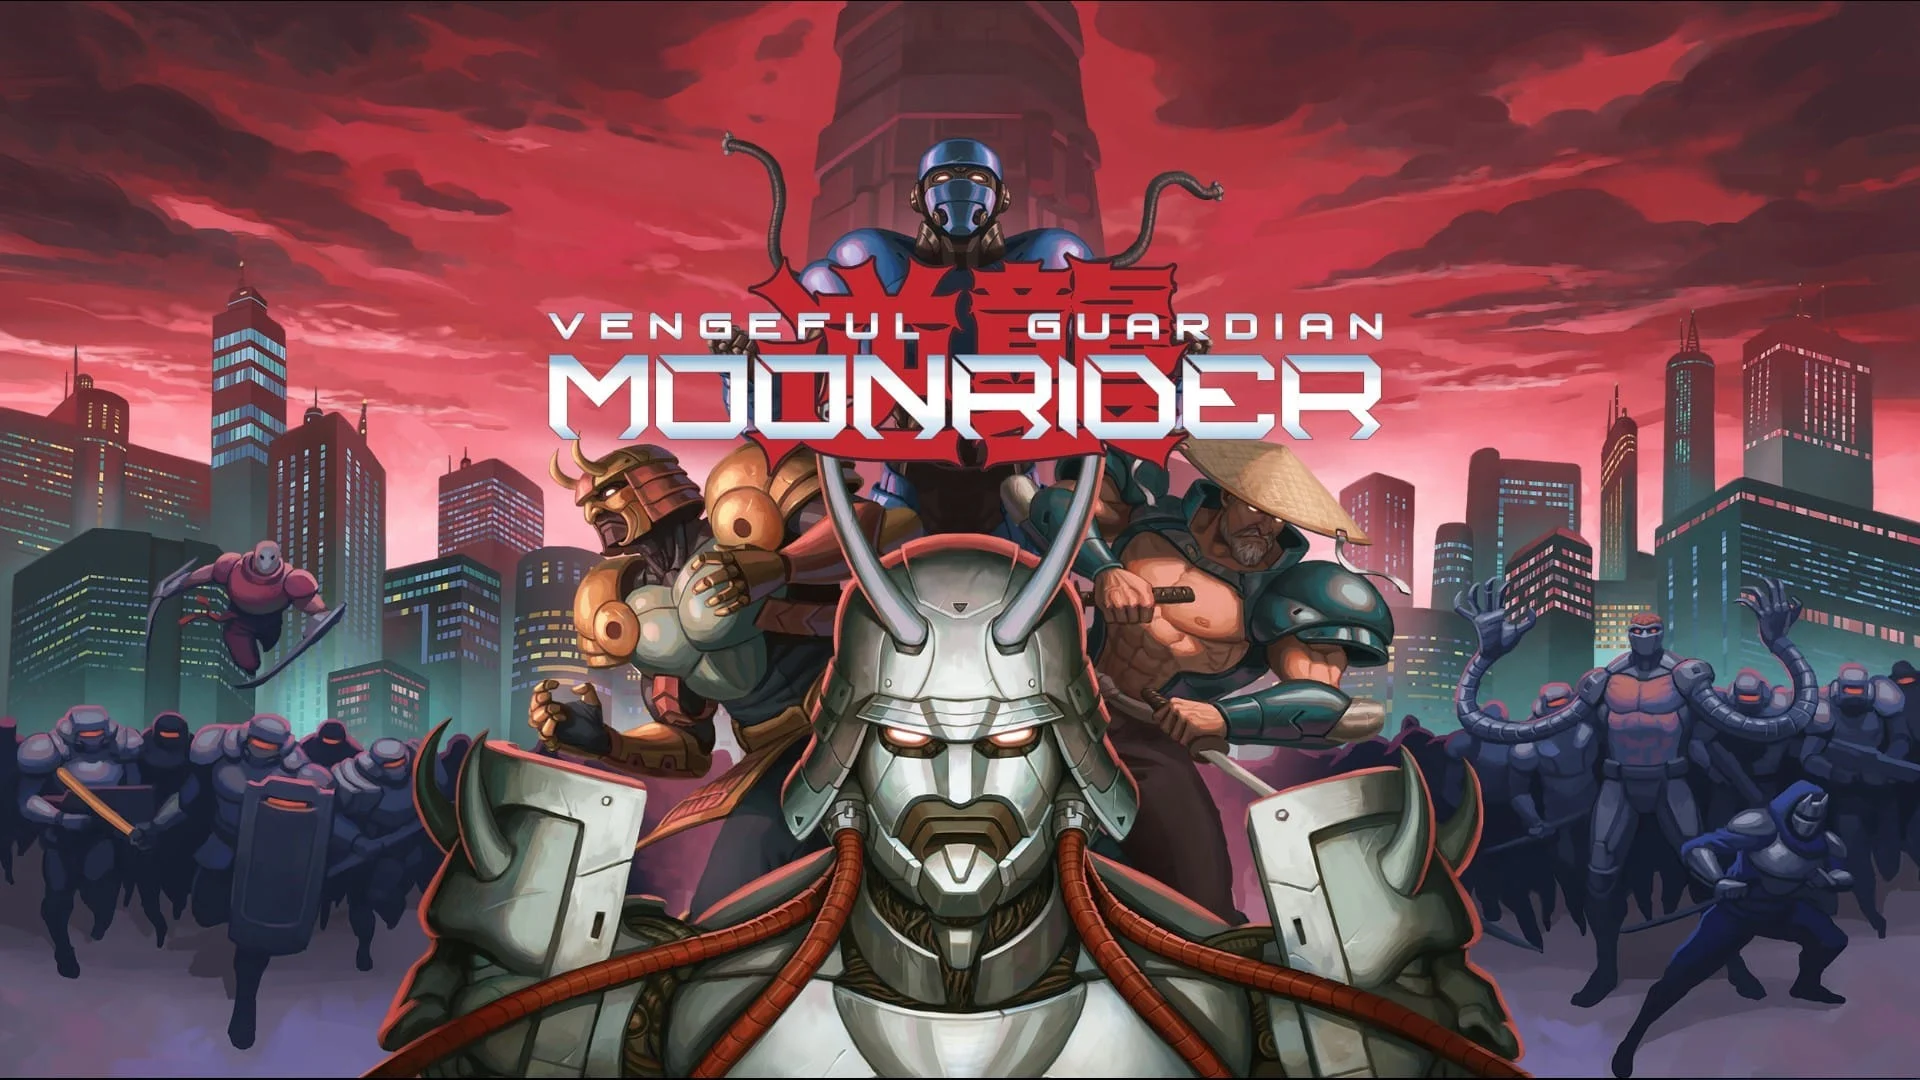 Vengeful Guardian: Moonrider on Steam